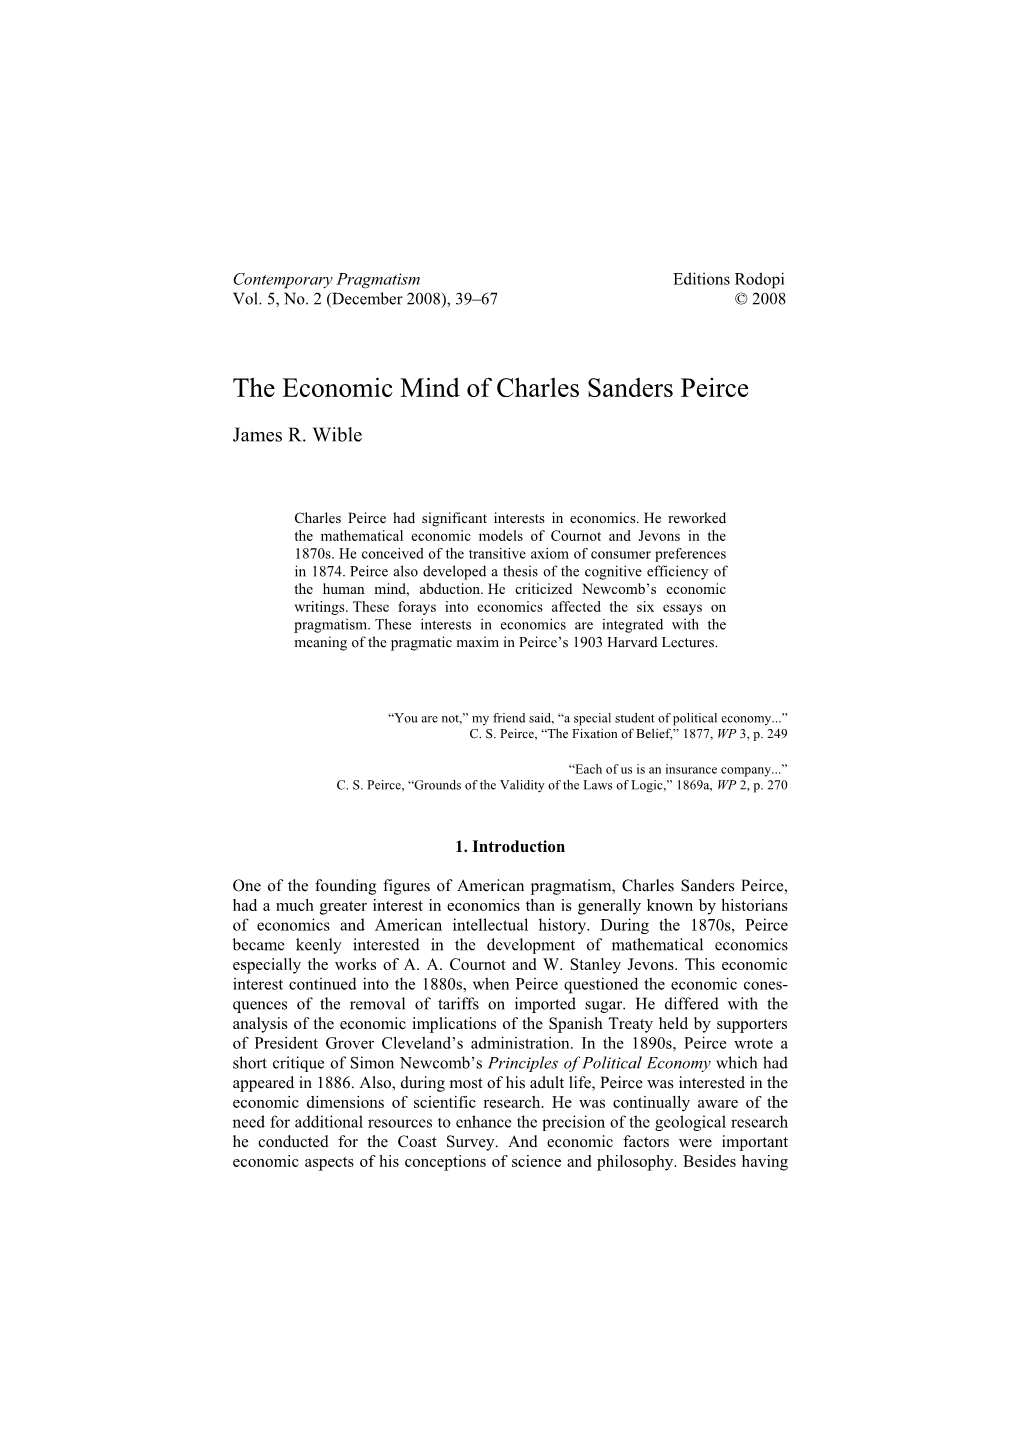 The Economic Mind of Charles Sanders Peirce